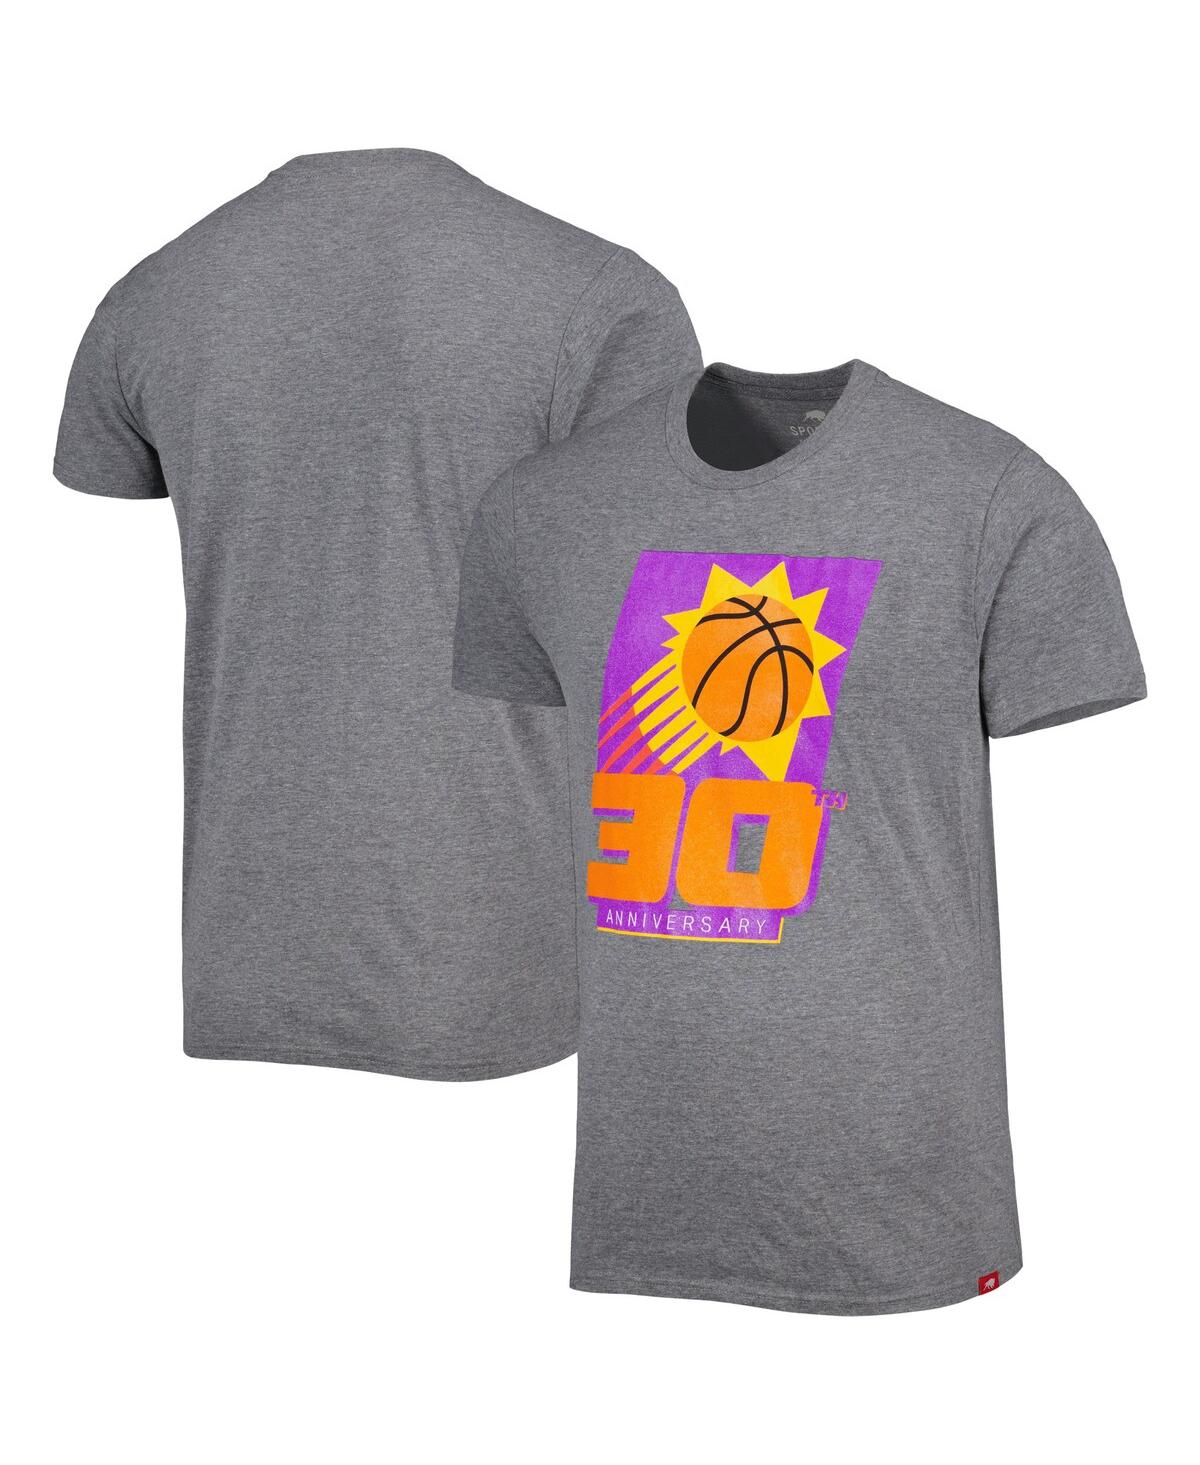 Men's and Women's Sportiqe Heather Gray Phoenix Suns 30th Anniversary Celebration Comfy Tri-Blend T-shirt - Heather Gray